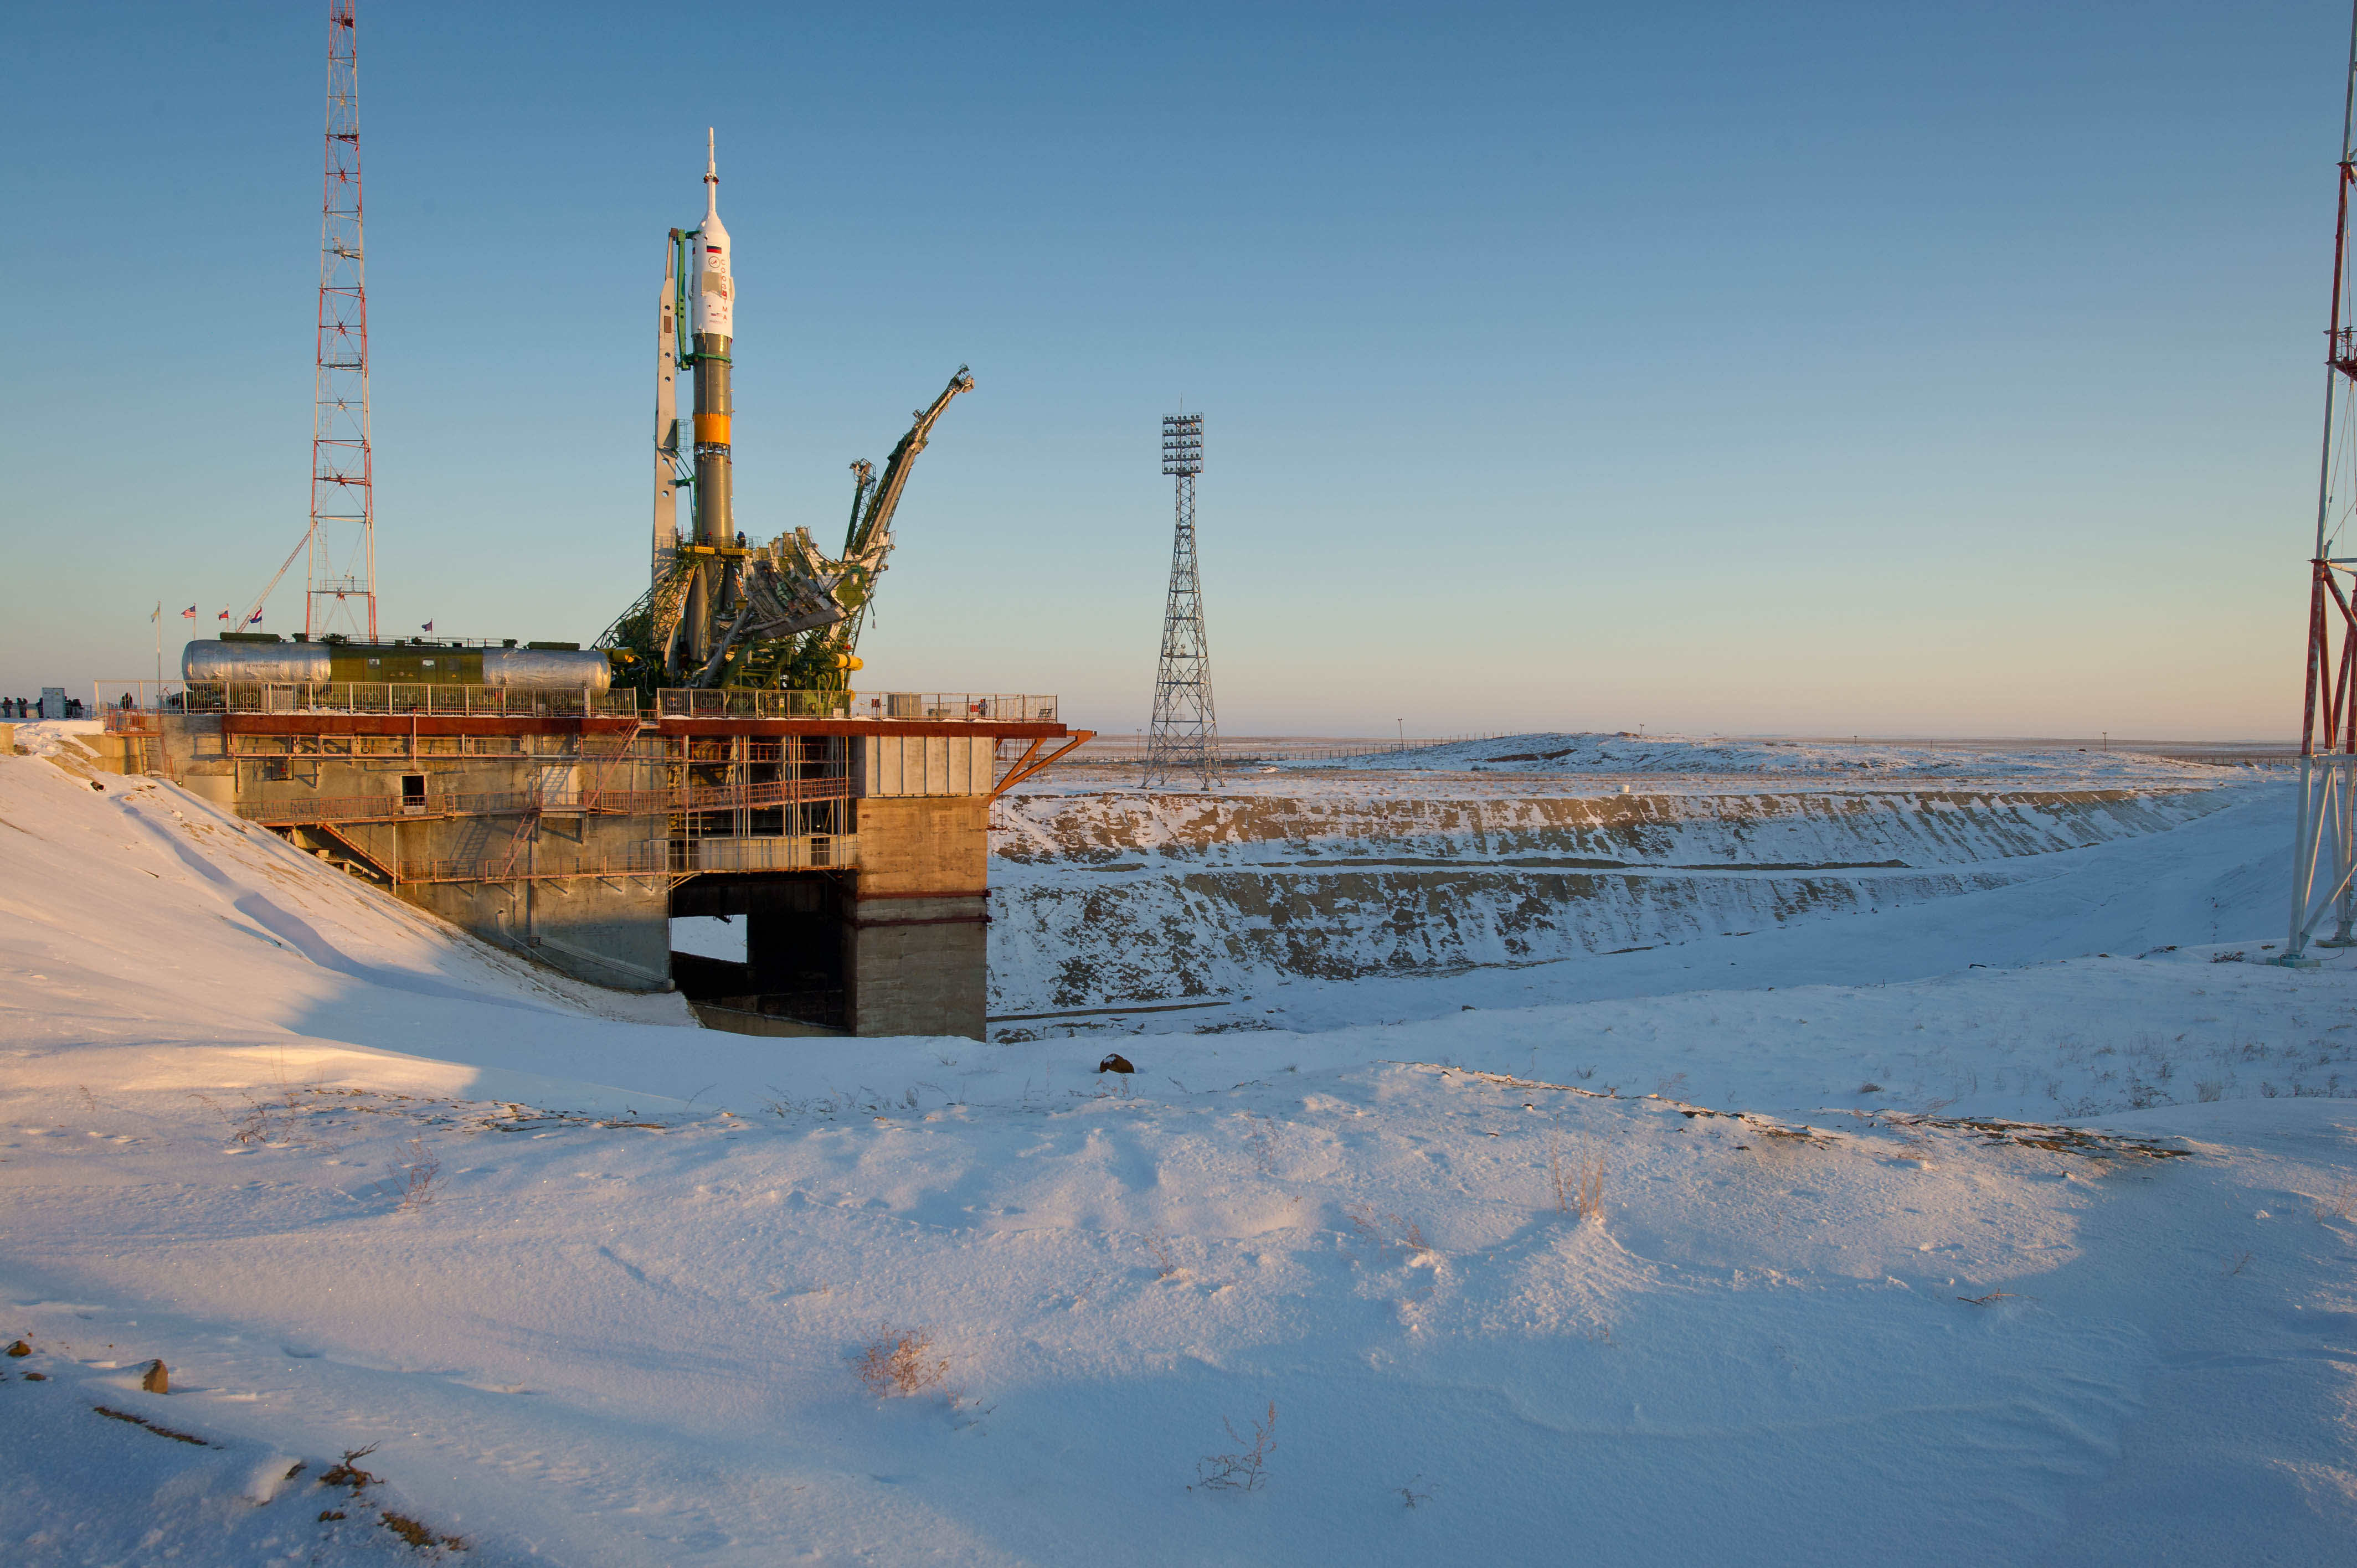 Soyuz TMA-03M rocket at the launch pad